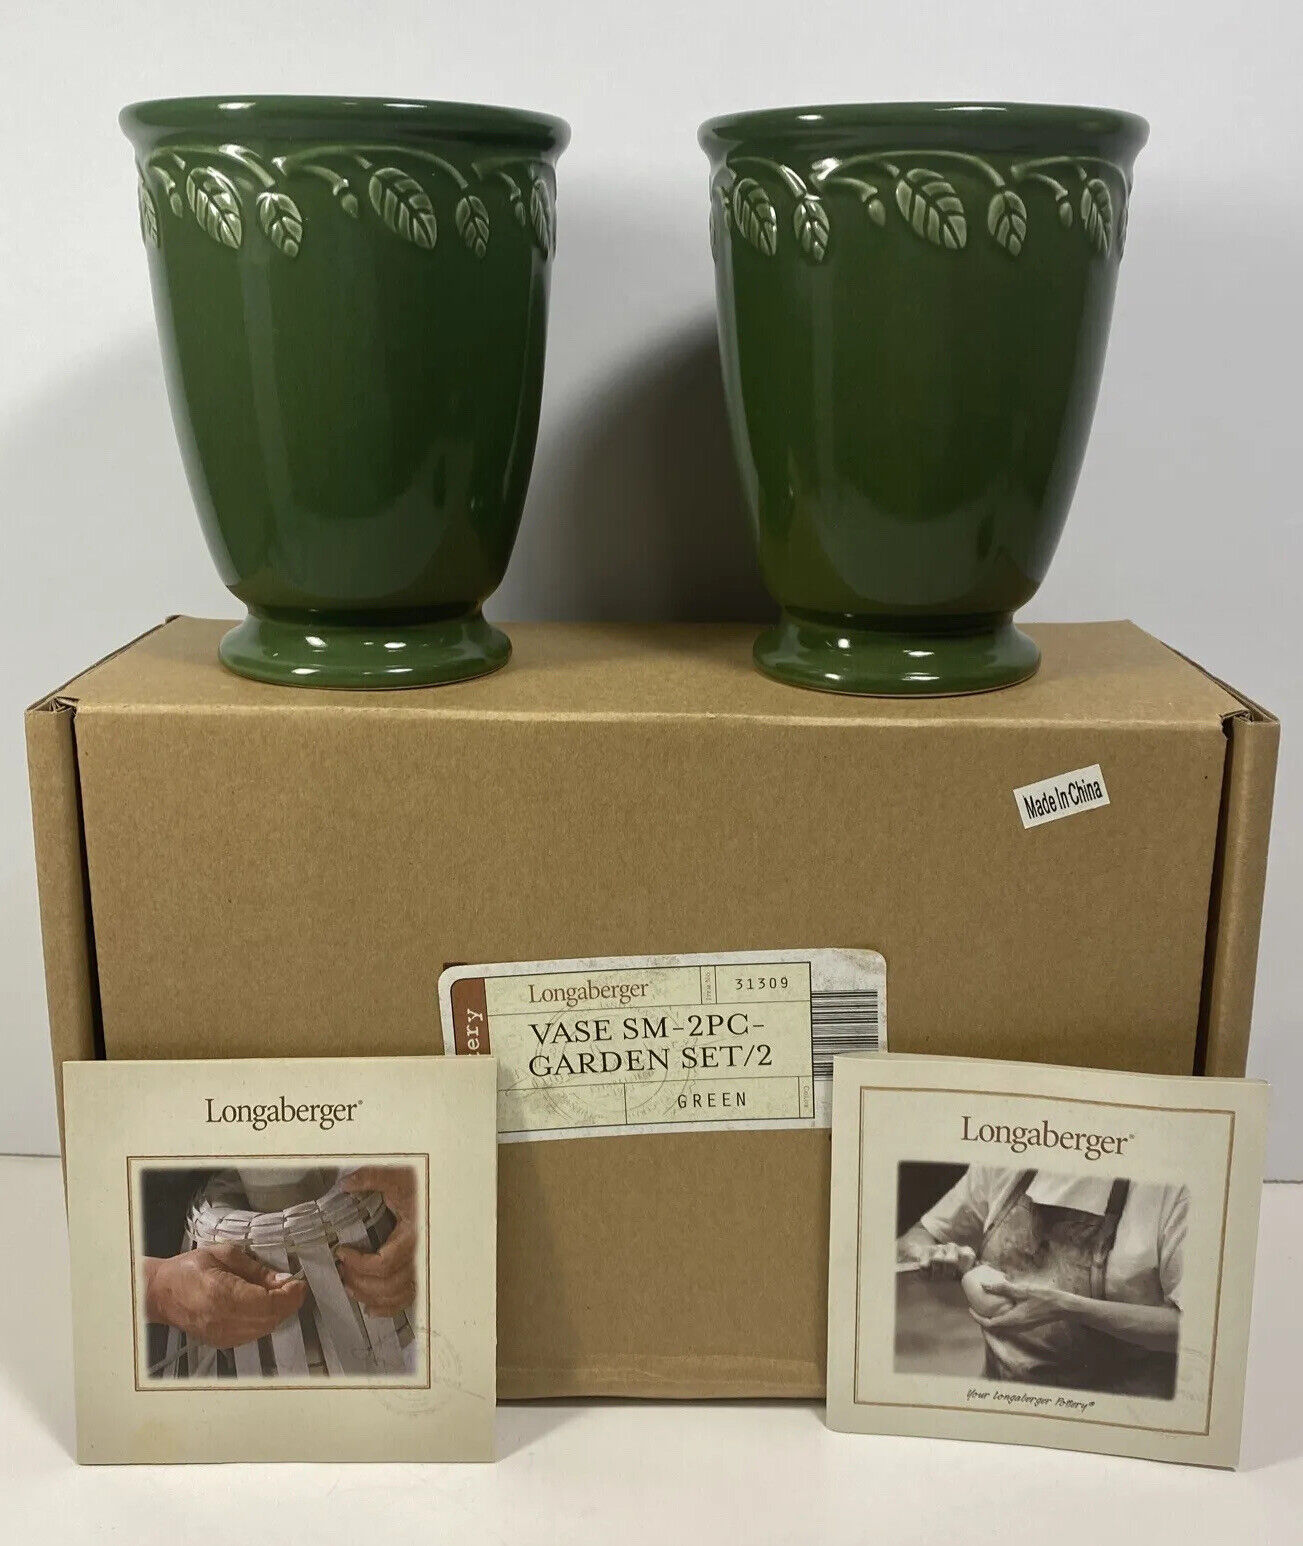 Longaberger At Home Garden Small Vase Set NIB - 31309